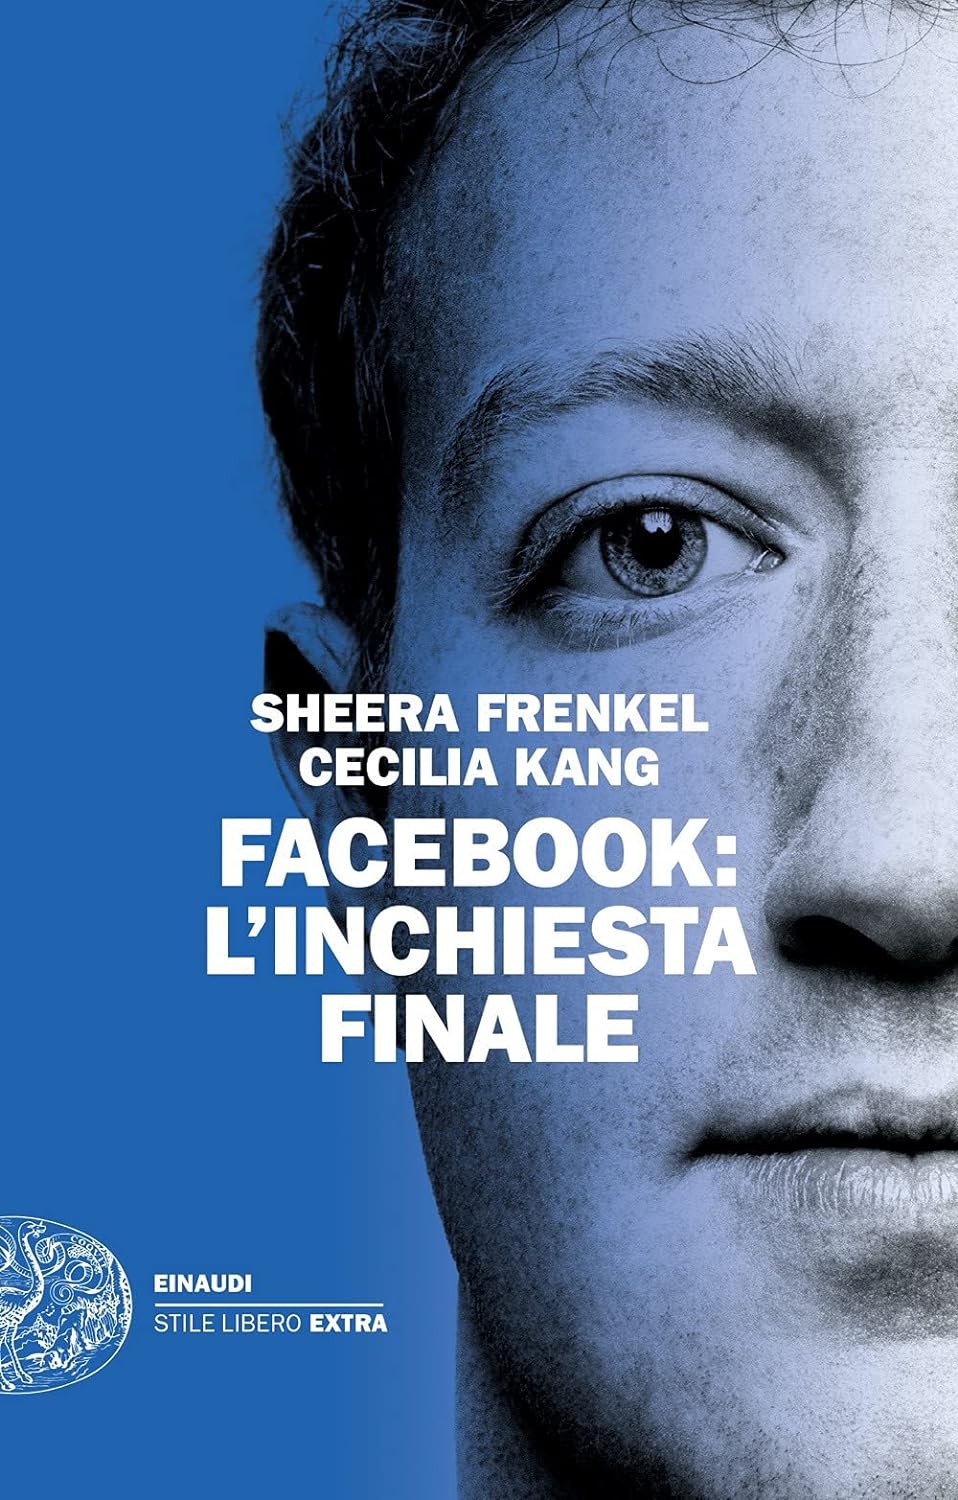 Cecilia Kang, Sheera Frenkel: Facebook: l'inchiesta finale (Italiano language, Einaudi)